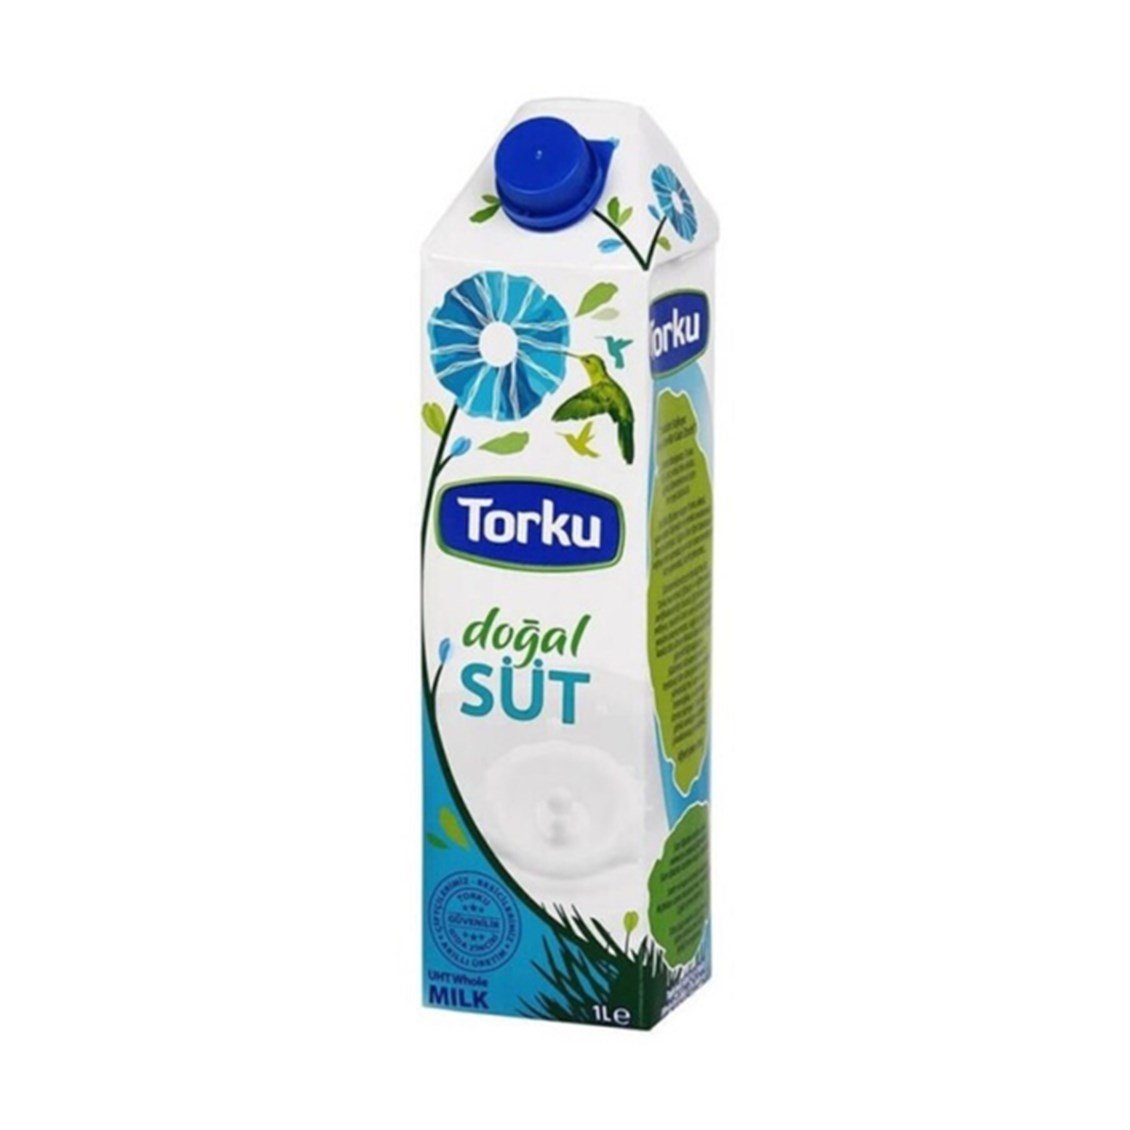 Torku Tam Yağlı Süt 1 lt - Onur Market